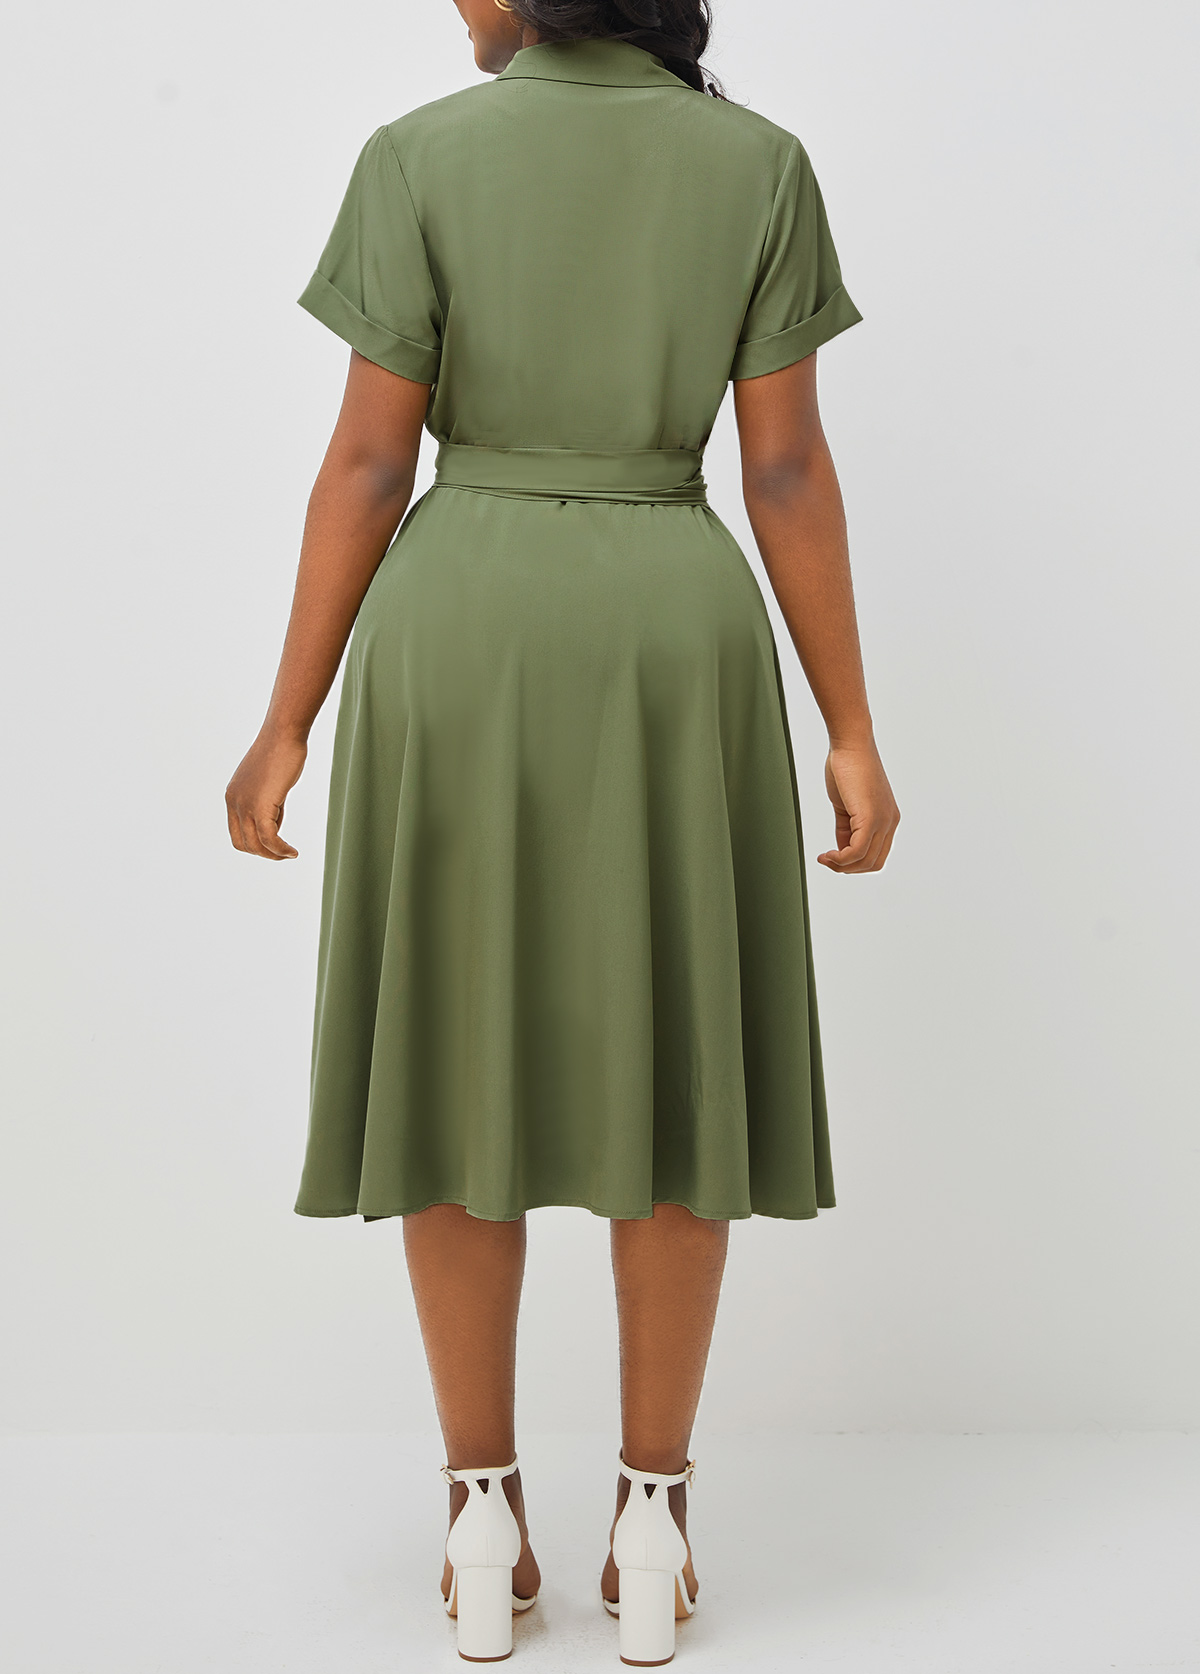 Notch Collar Short Sleeve Army Green Dress